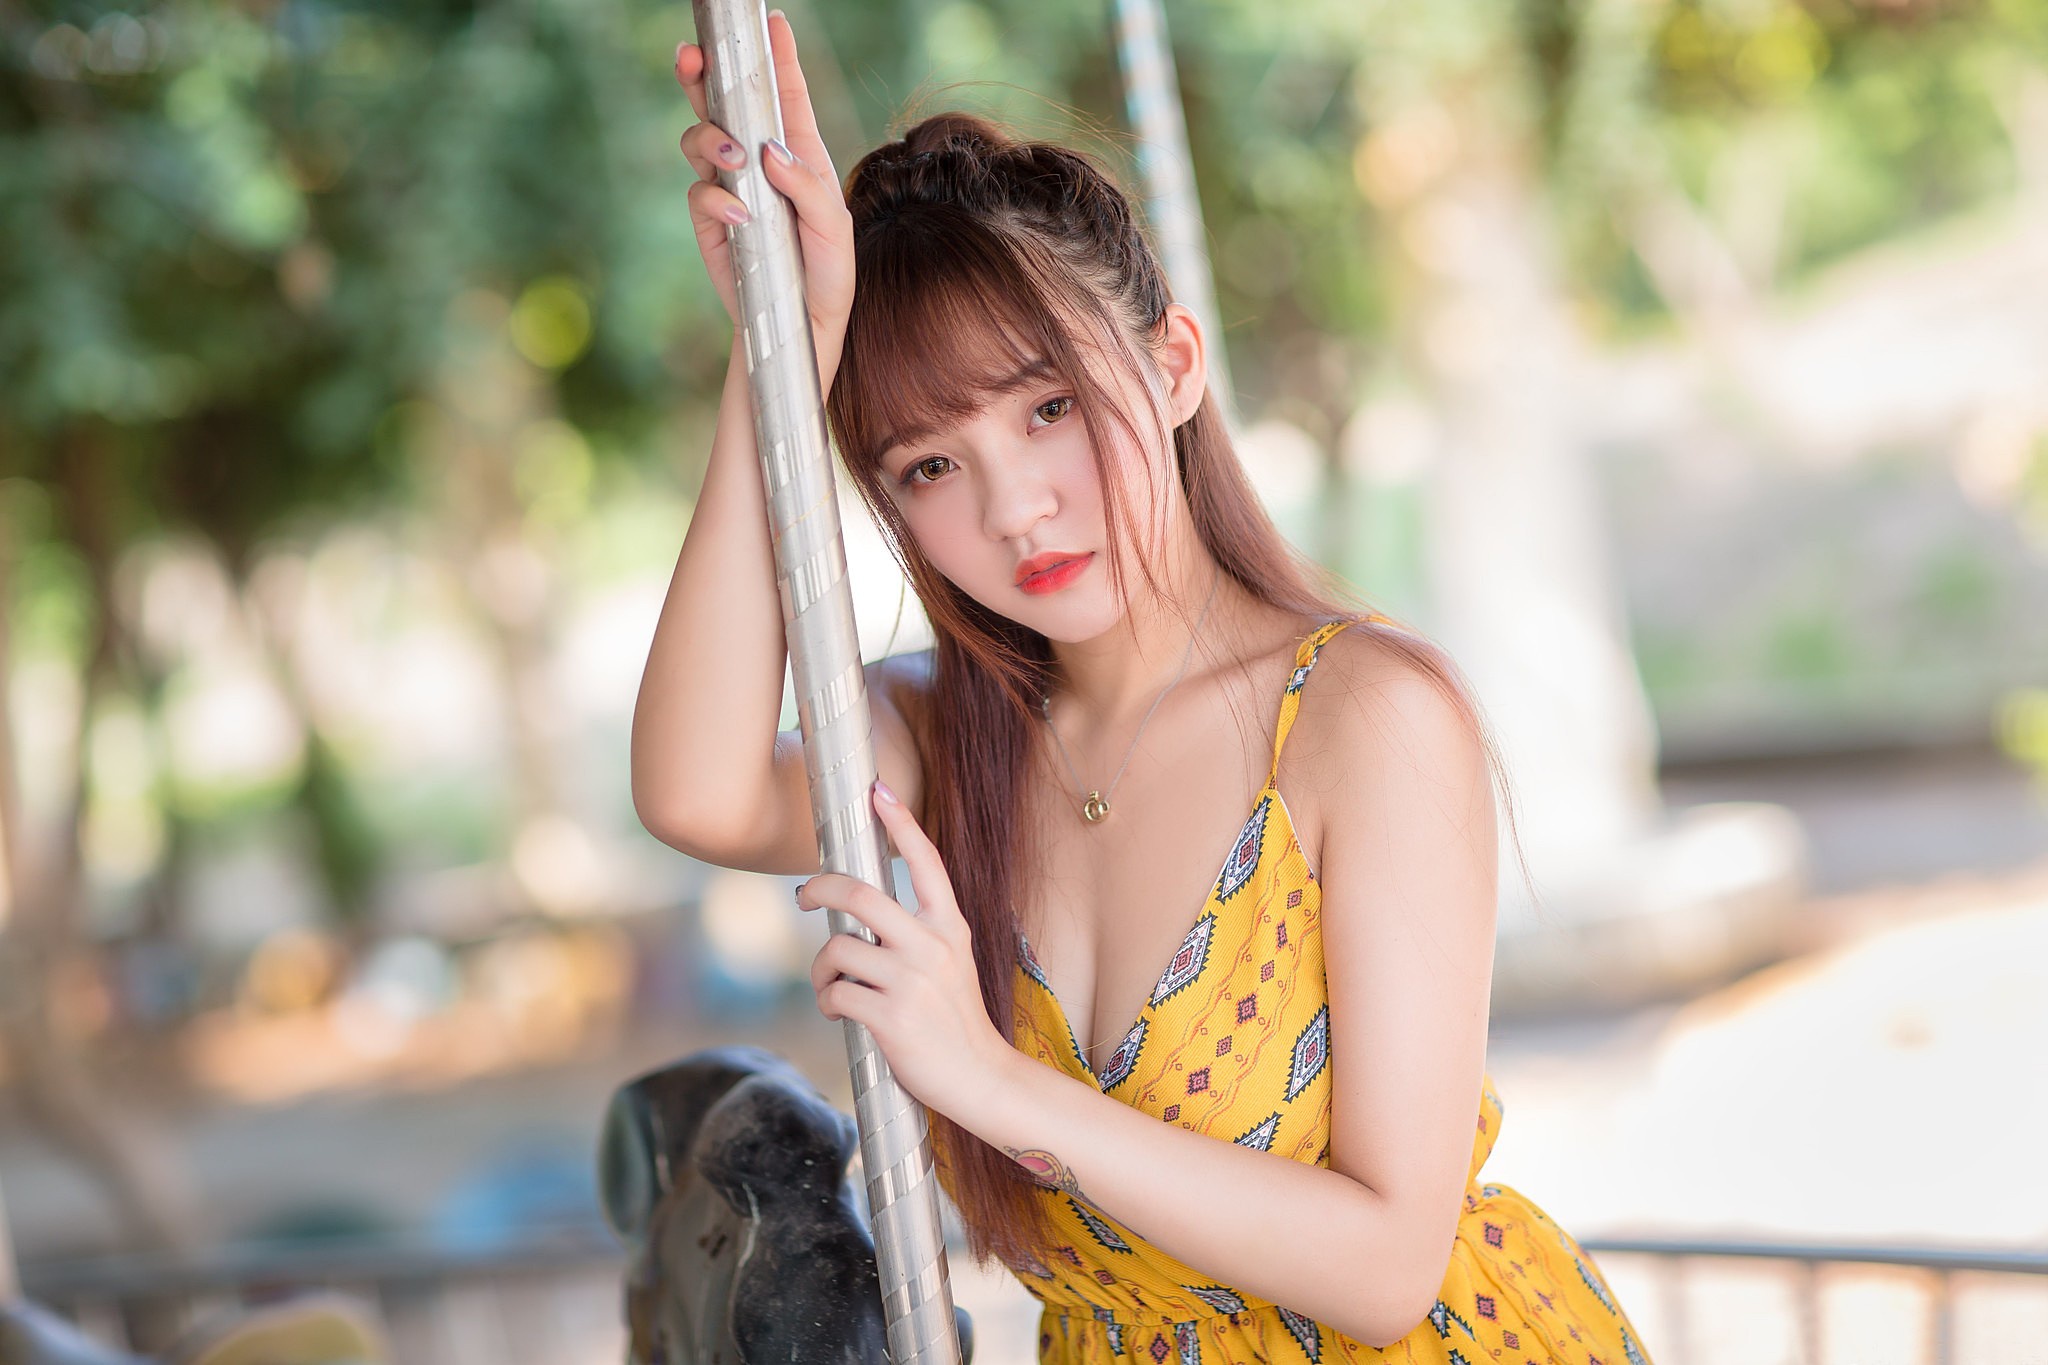 Asian Women Model Long Hair Brunette Carousel Necklace Looking At Viewer Depth Of Field 2048x1365